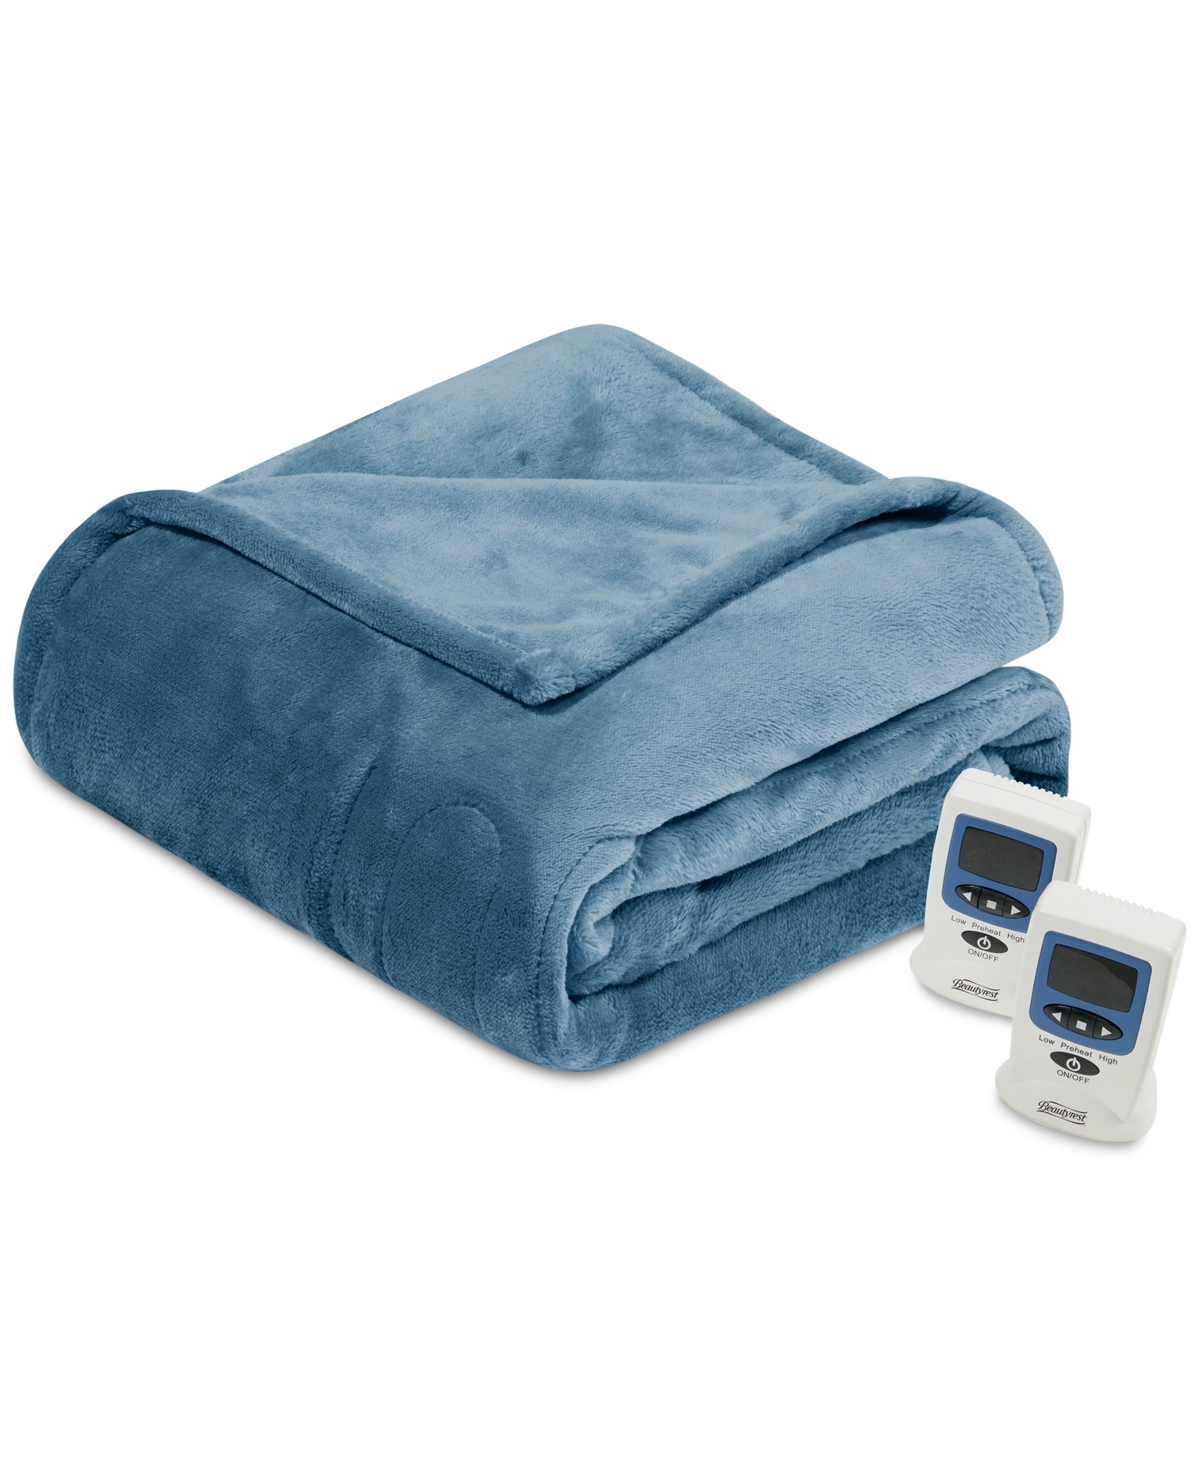 Beautyrest Electric Plush Queen Blanket Bedding In Sapphire Blue